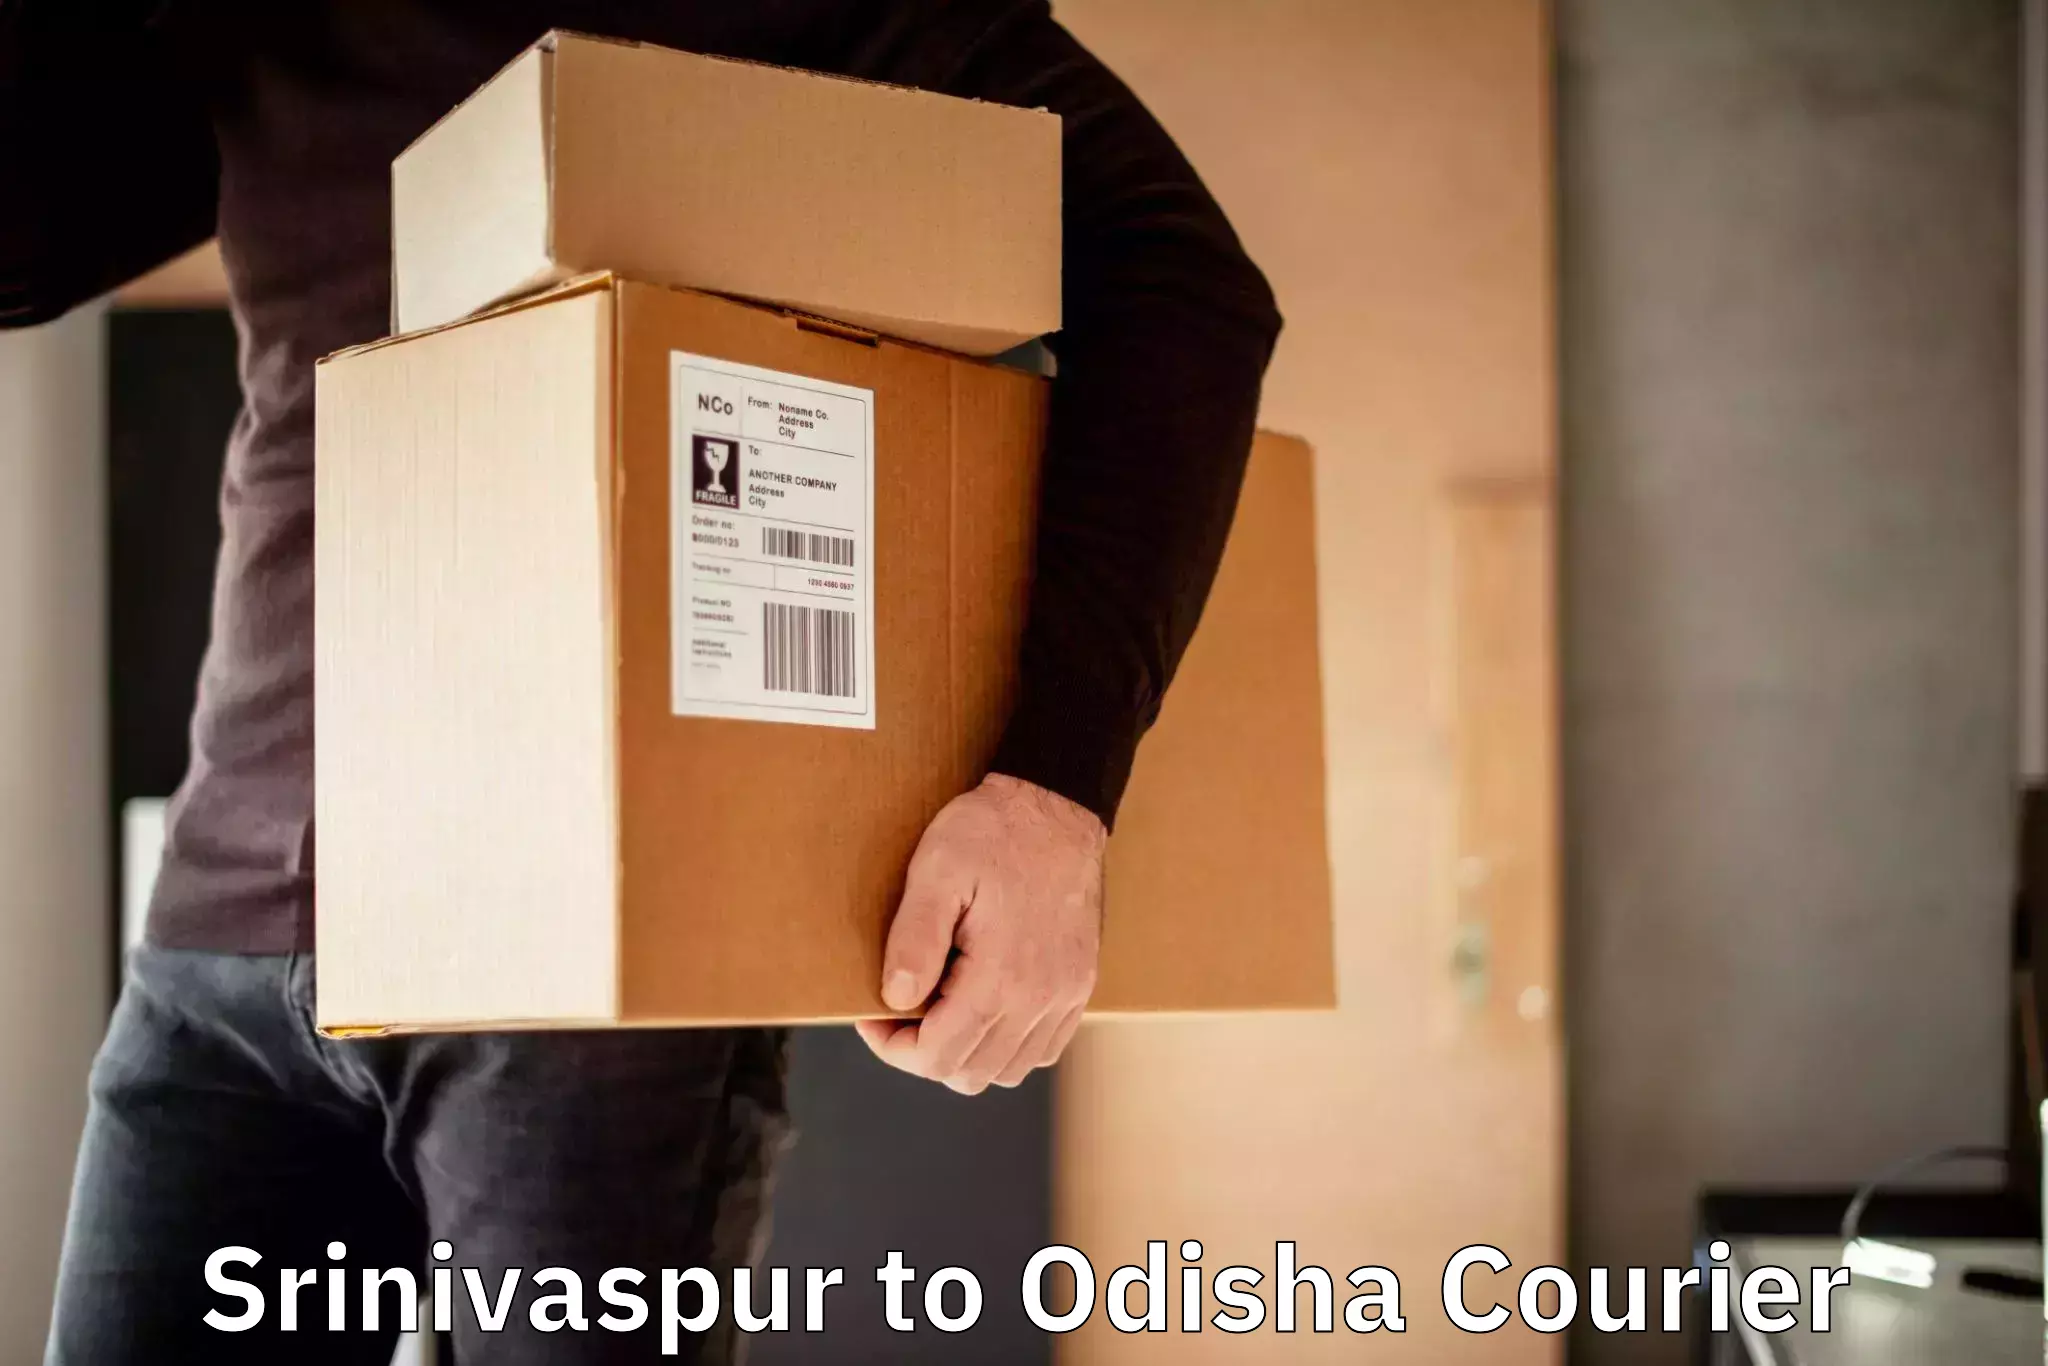 Courier service innovation Srinivaspur to Gajapati